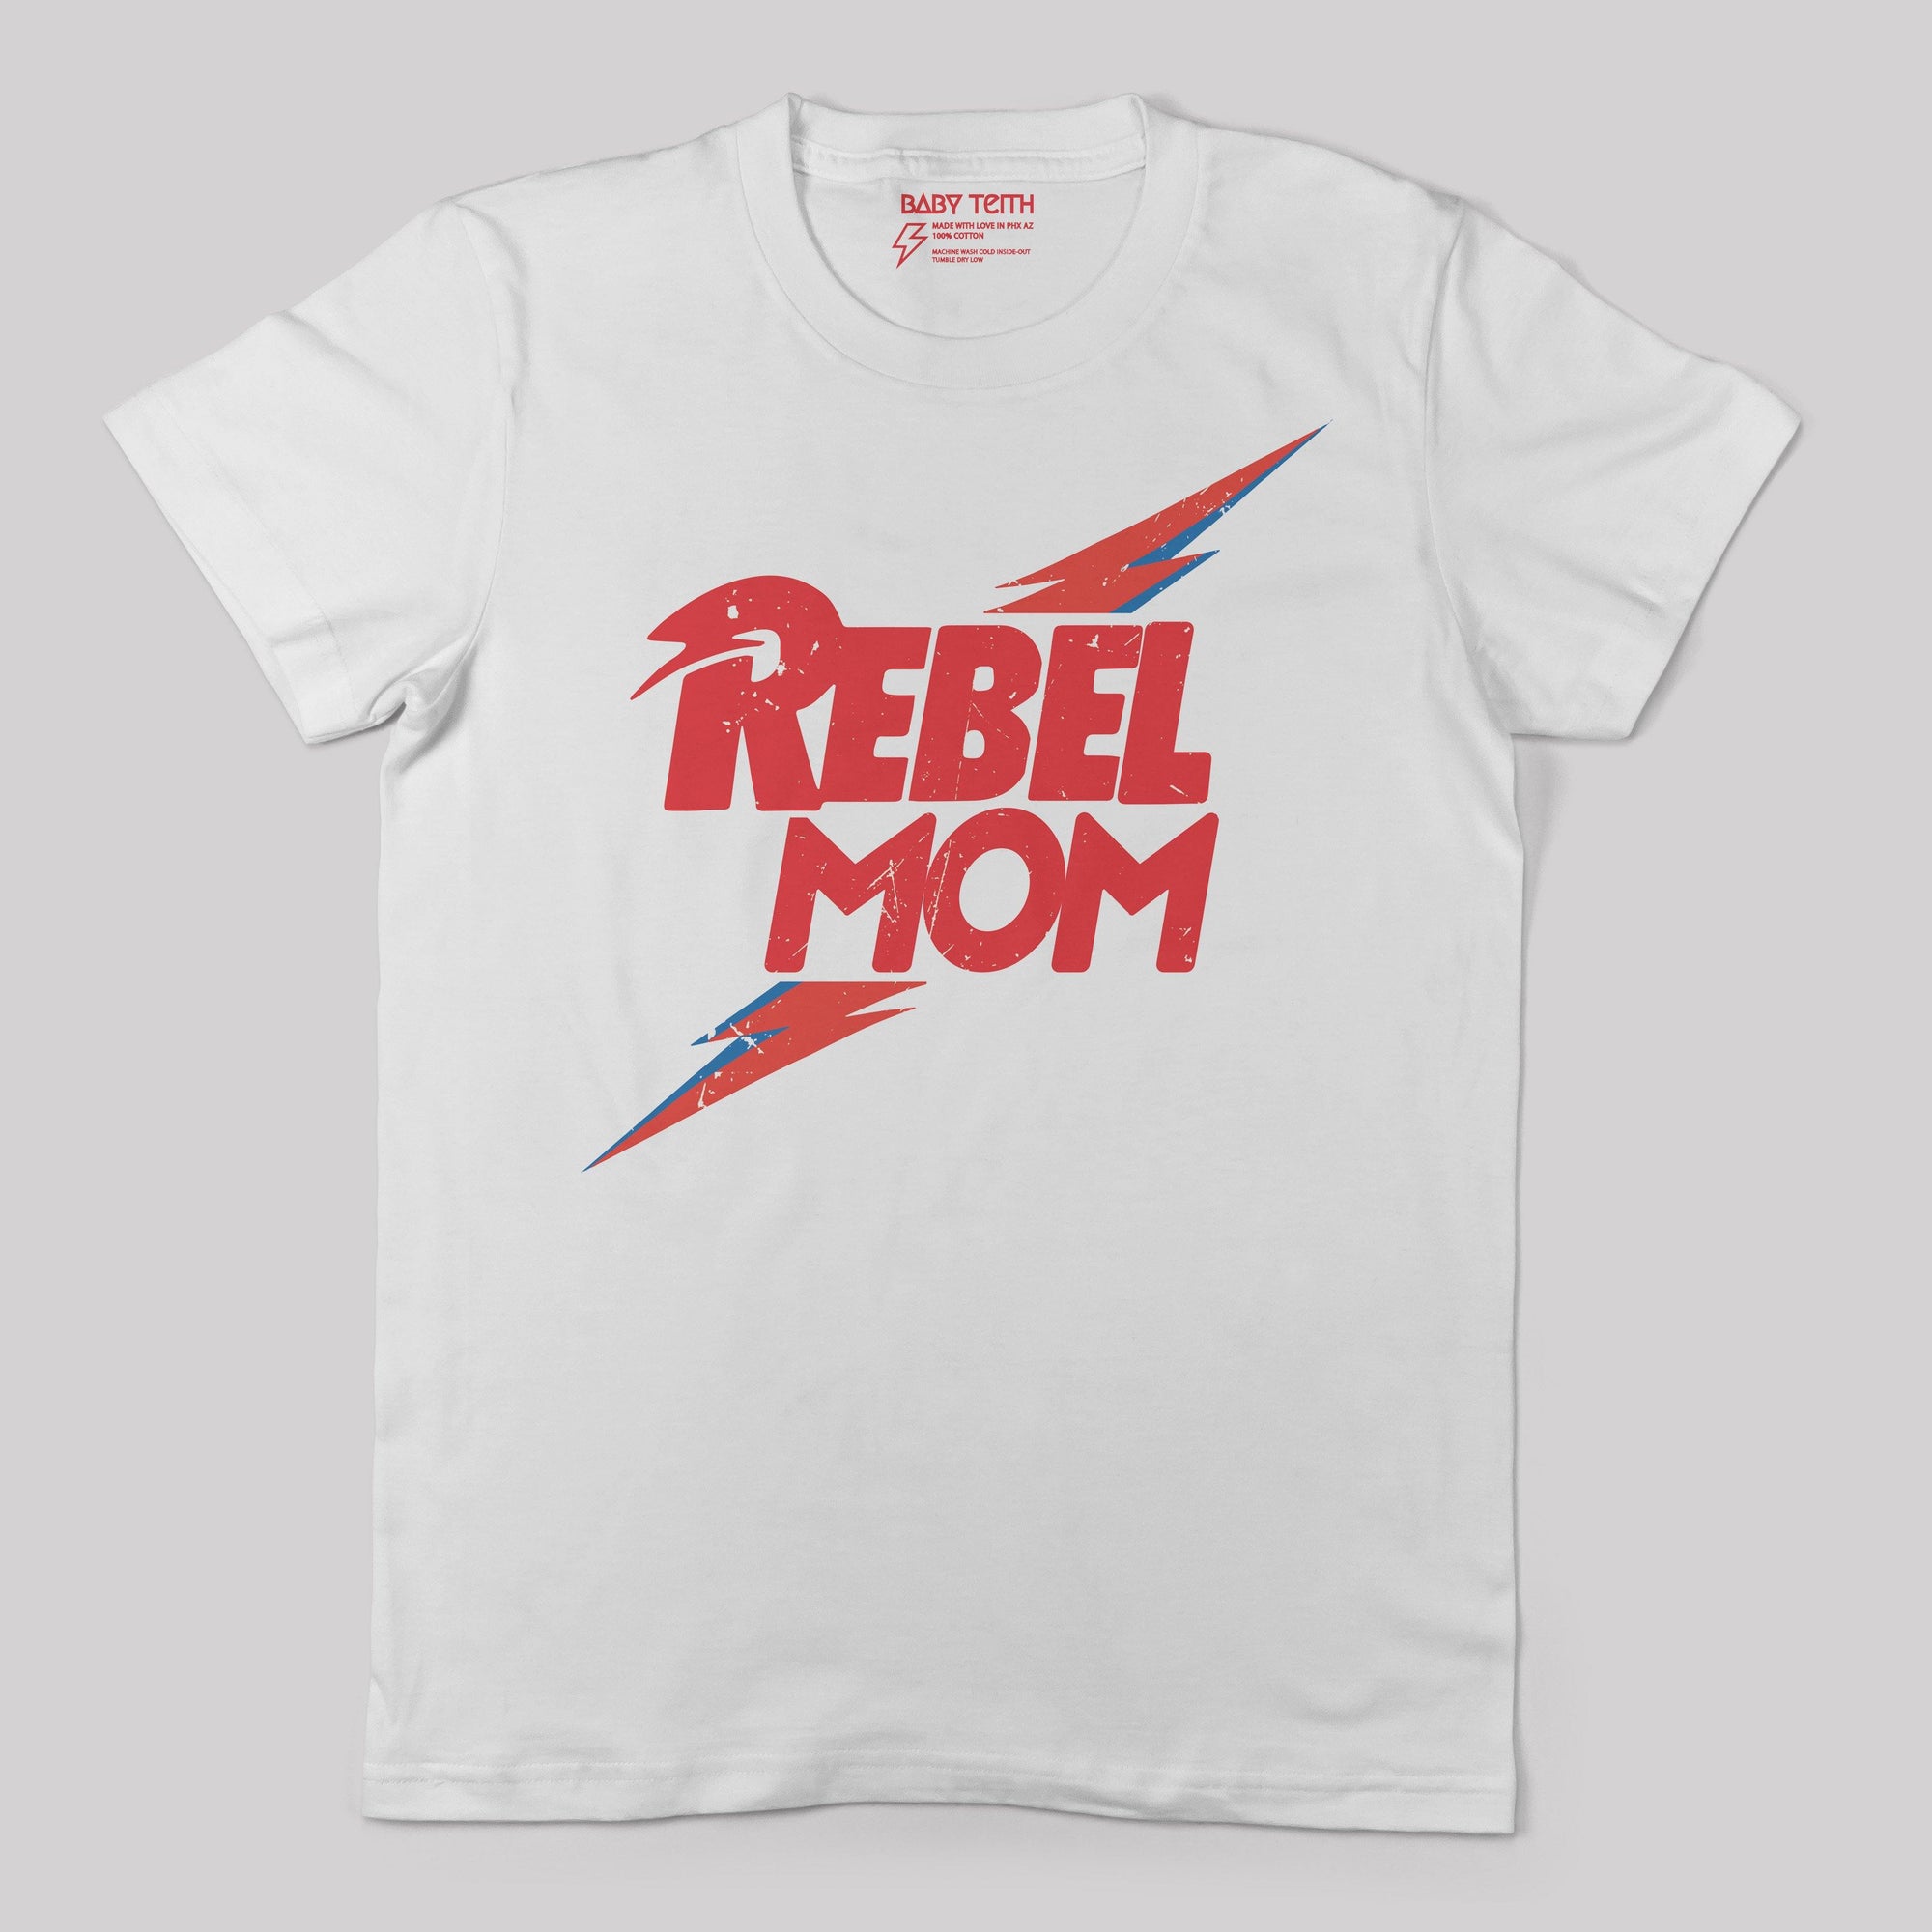 Rebel Mom Tee - Unisex Fit (2 Colors) - Baby Teith